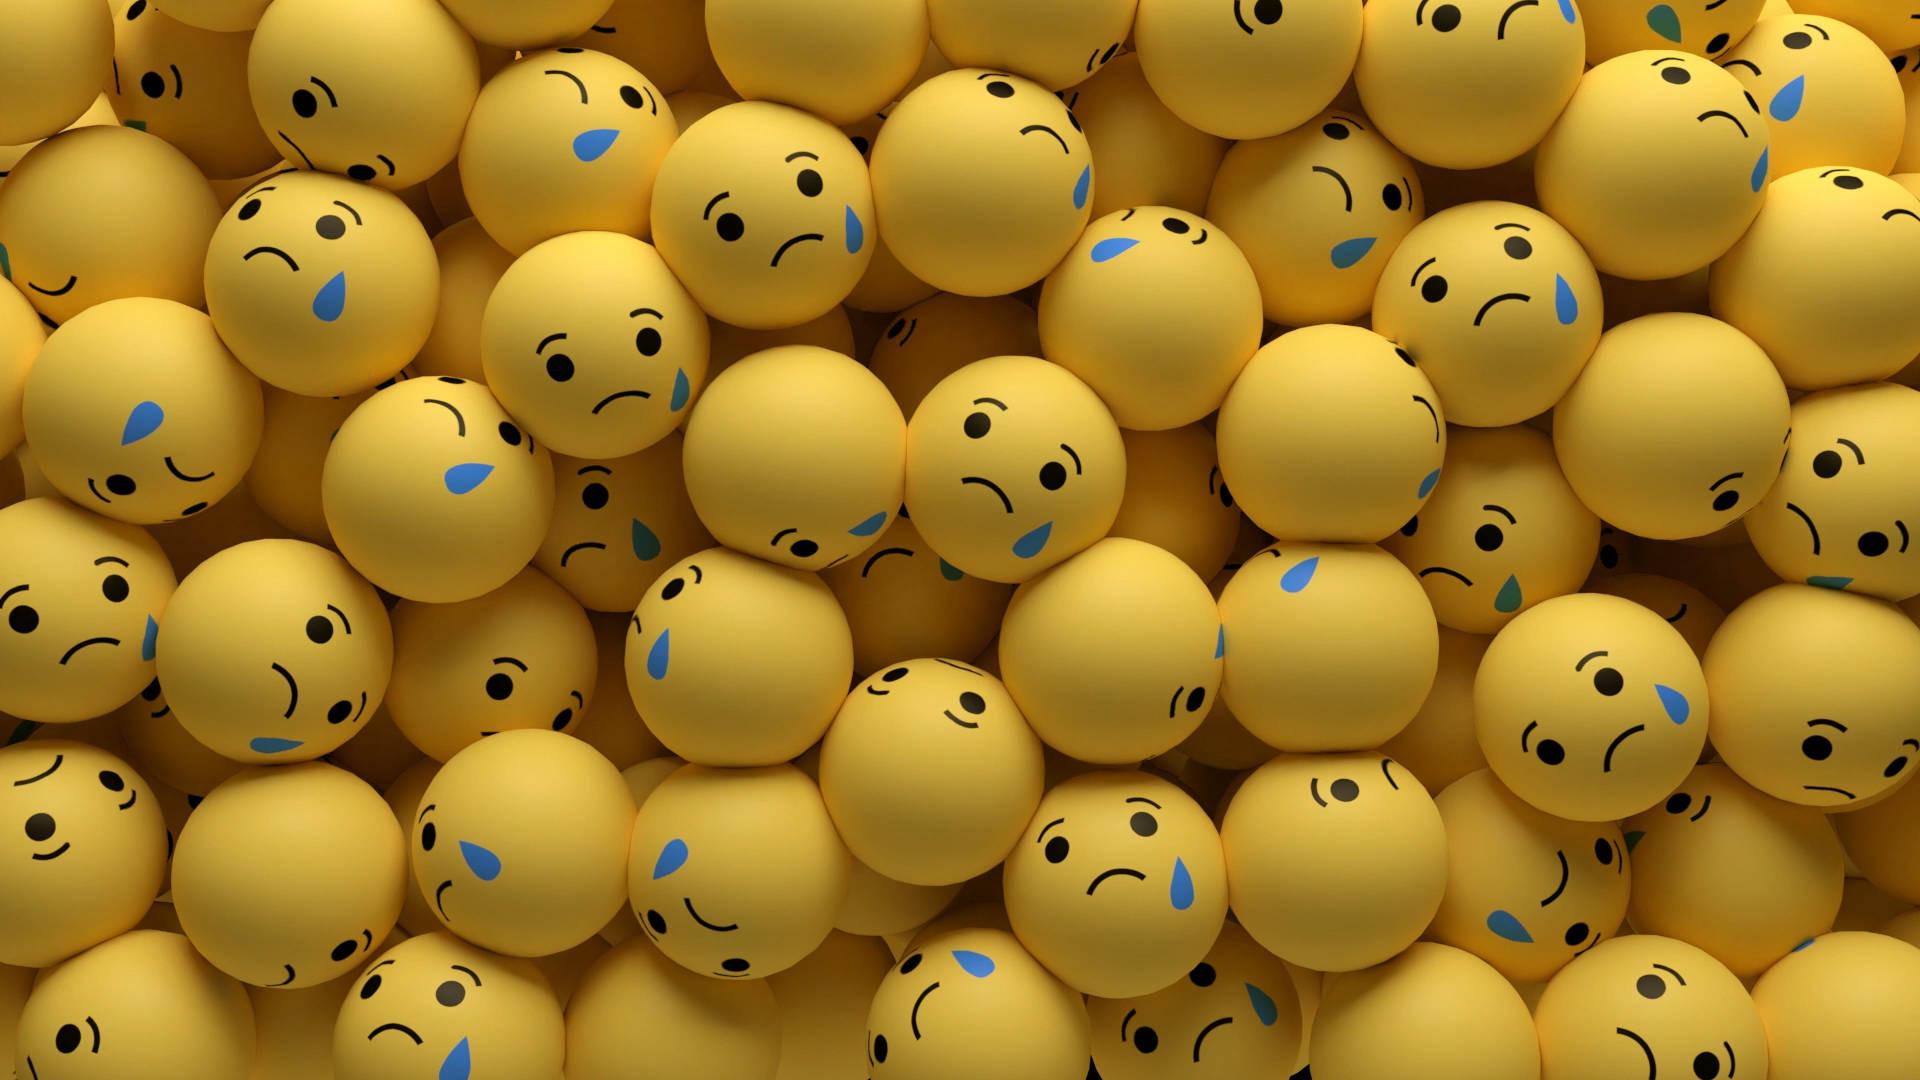 Sad Emoji Balls With Tear Drops